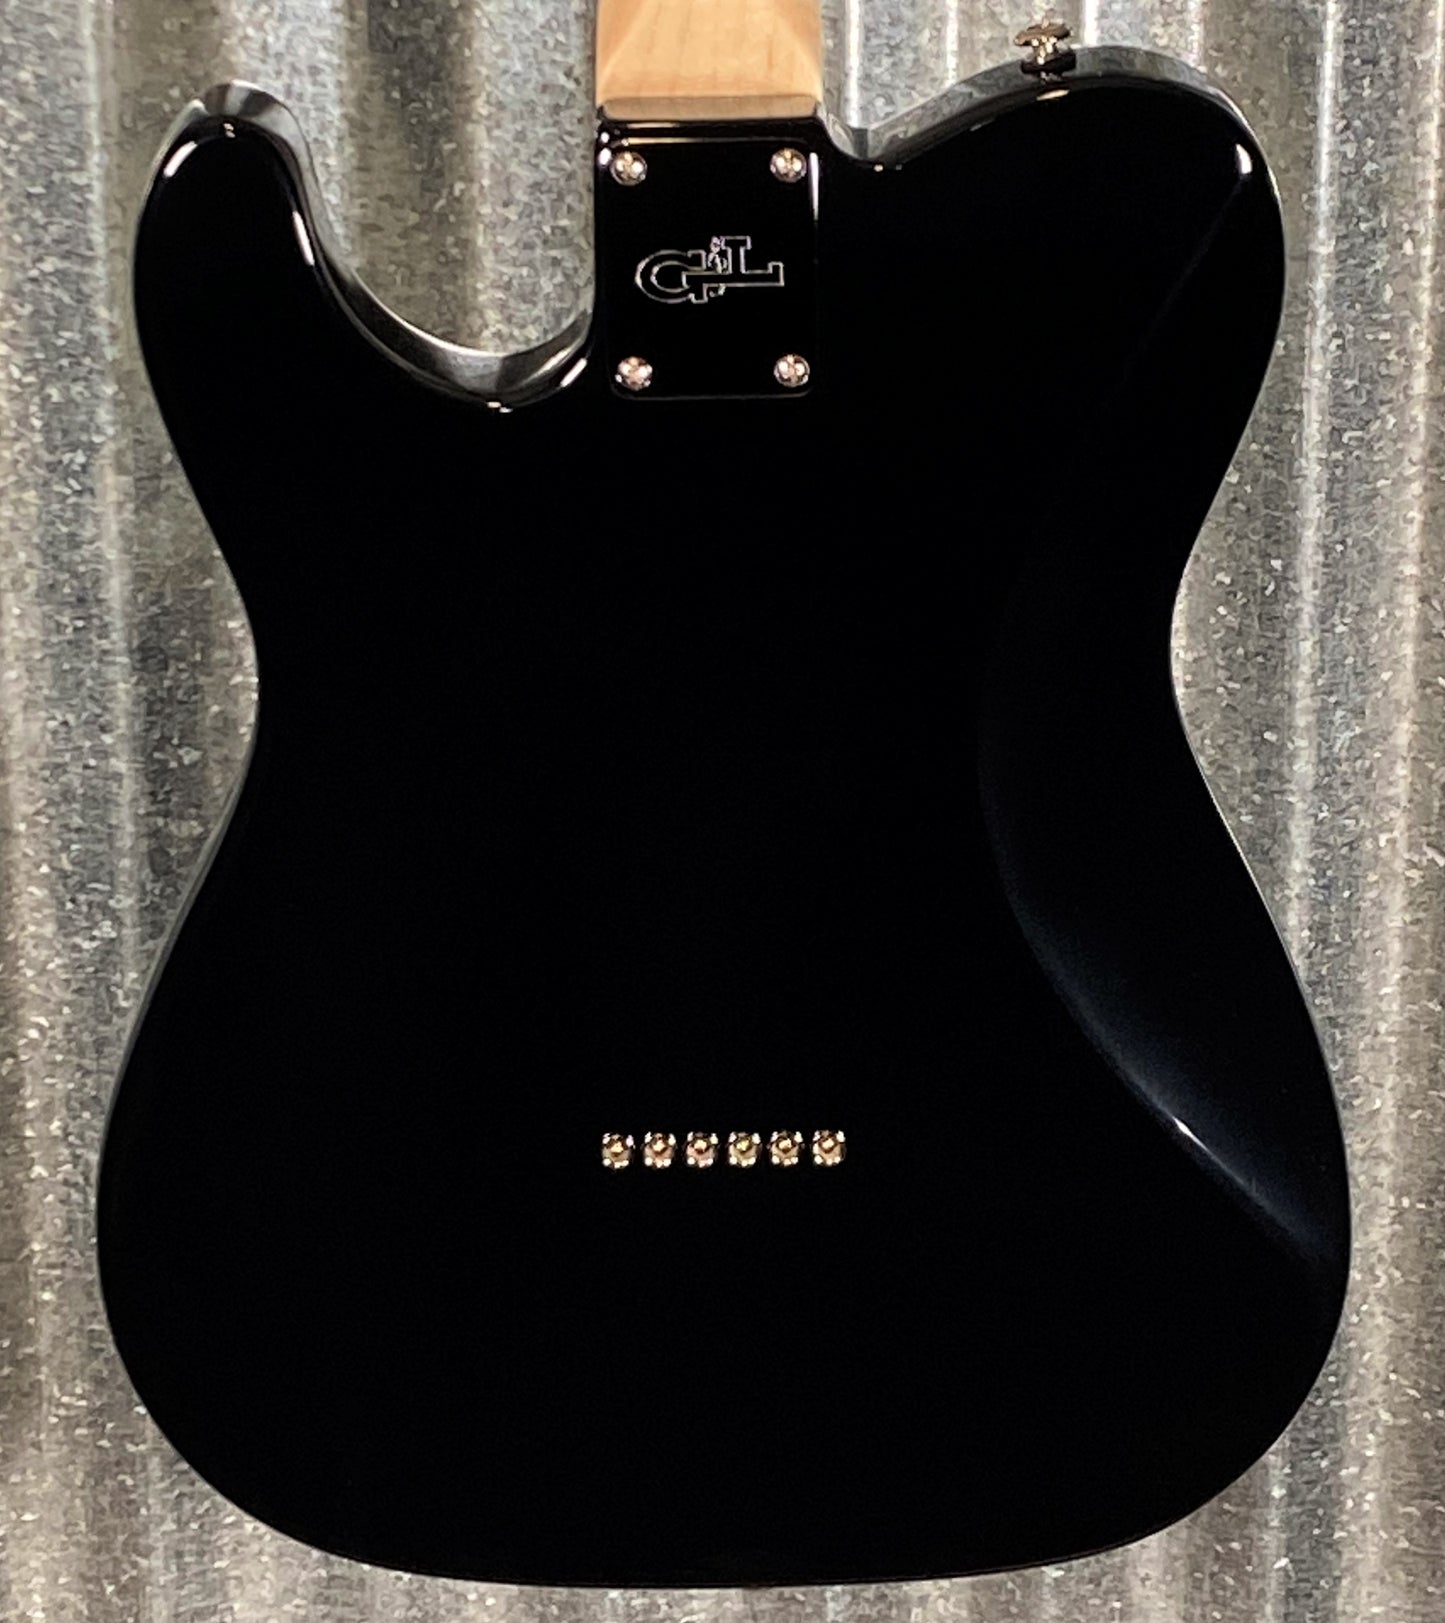 G&L USA ASAT Classic Jet Black Guitar & Bag #3002 Used